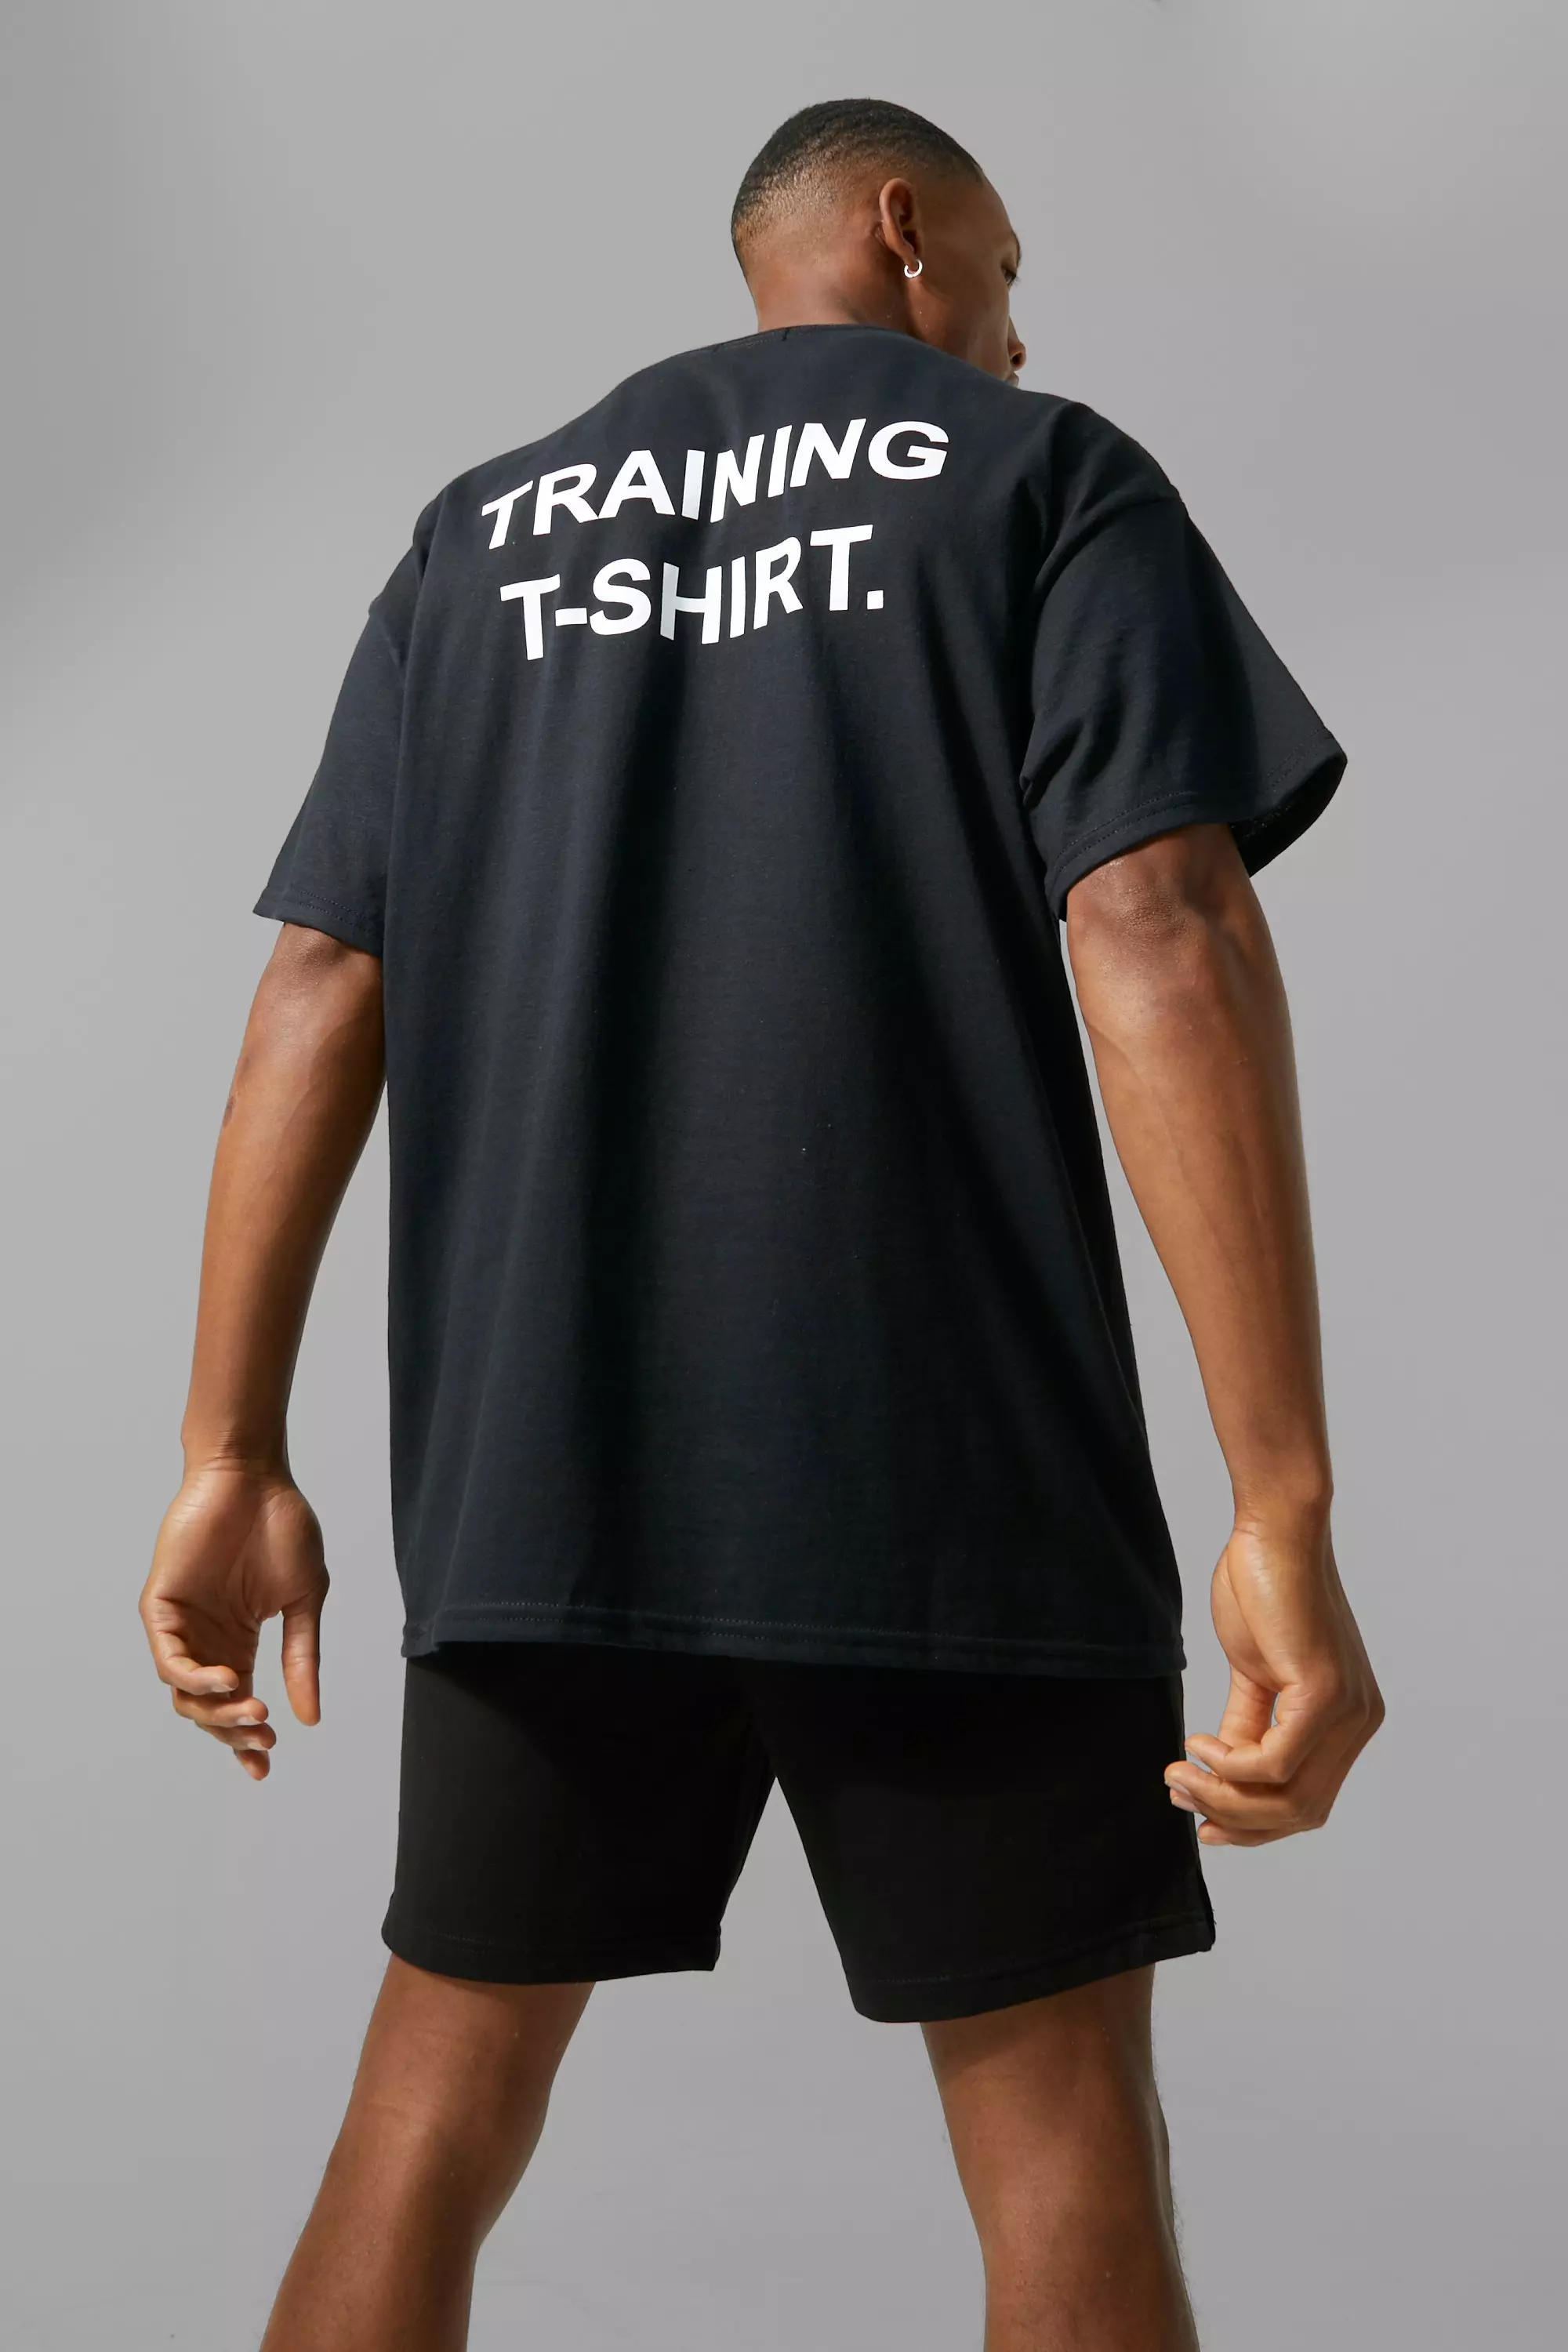 Jeg spiser morgenmad cilia leder Man Active Oversized Training T-shirt | boohooMAN USA